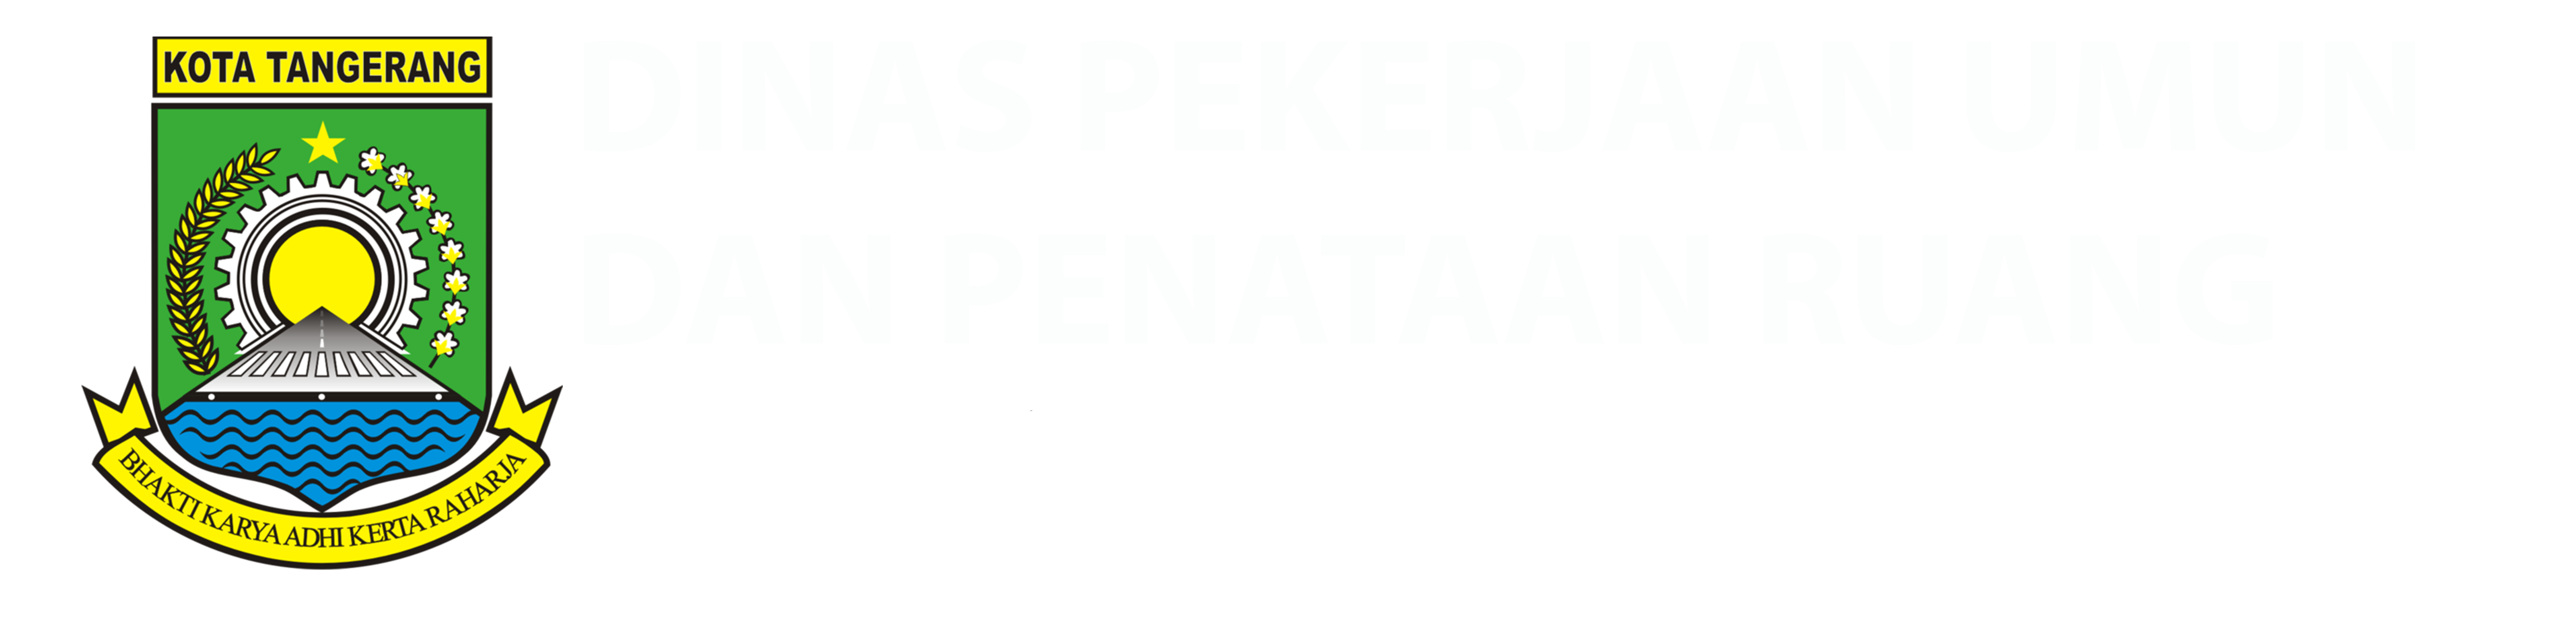 Logo dpupr Kota Tangerang